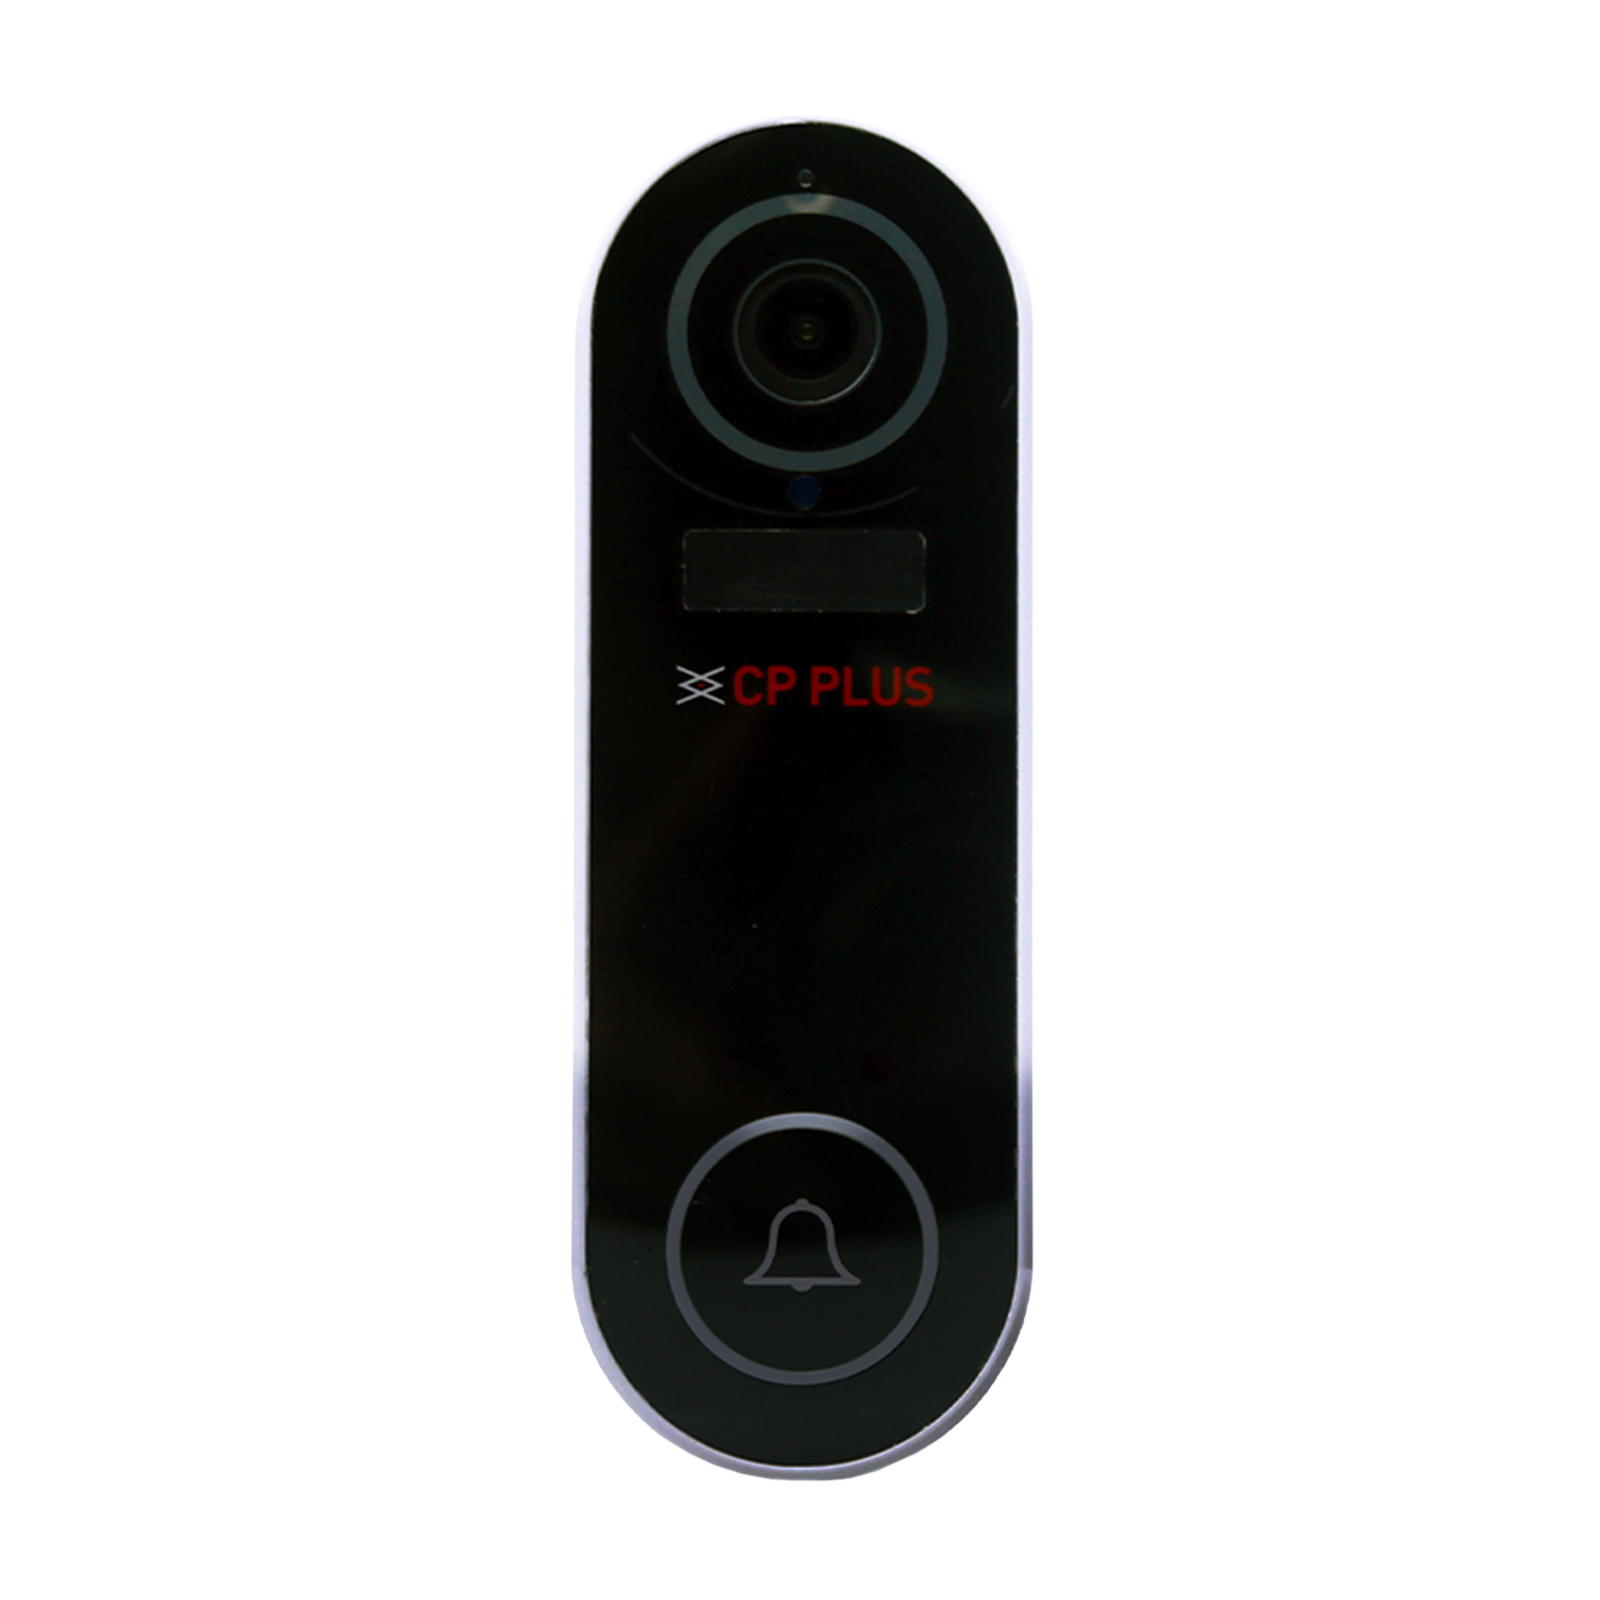 CP PLUS Video Door Bell (Google Assistant, CP-L23, Black)